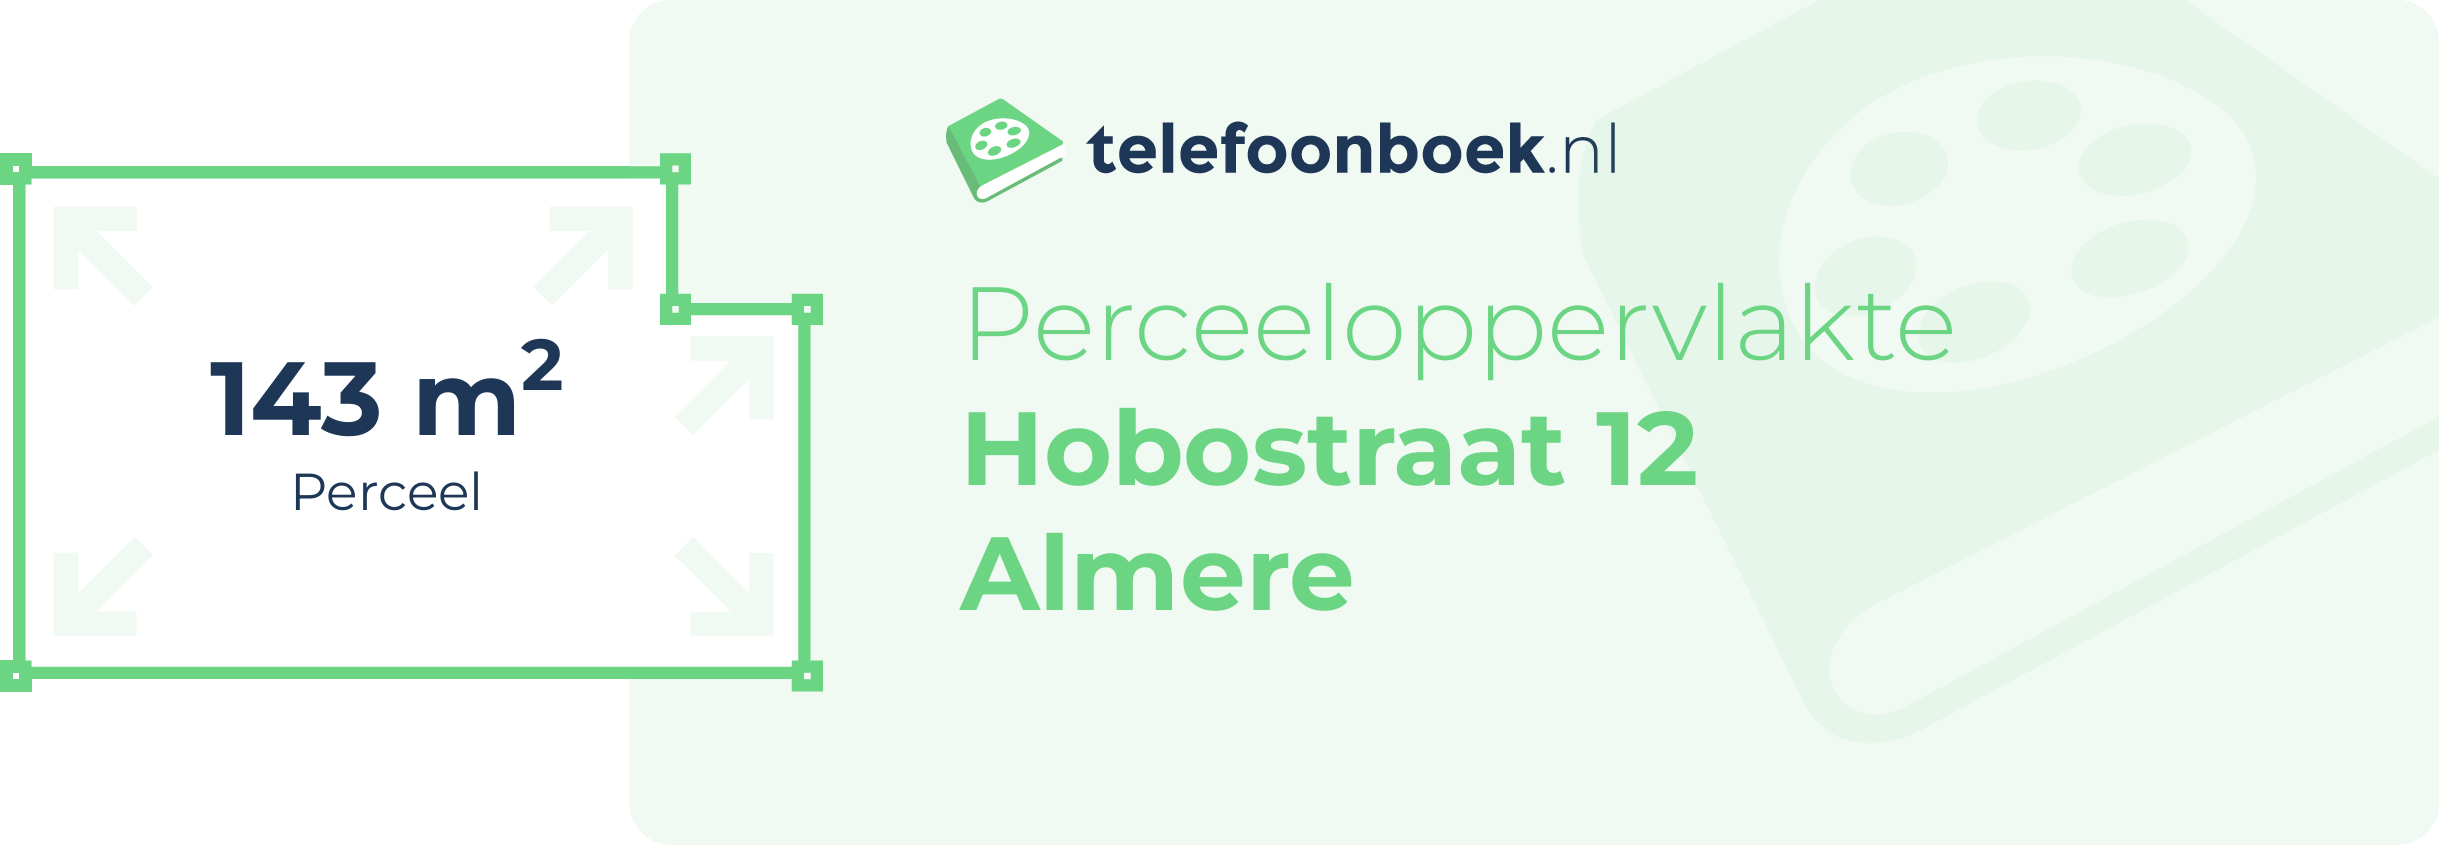 Perceeloppervlakte Hobostraat 12 Almere